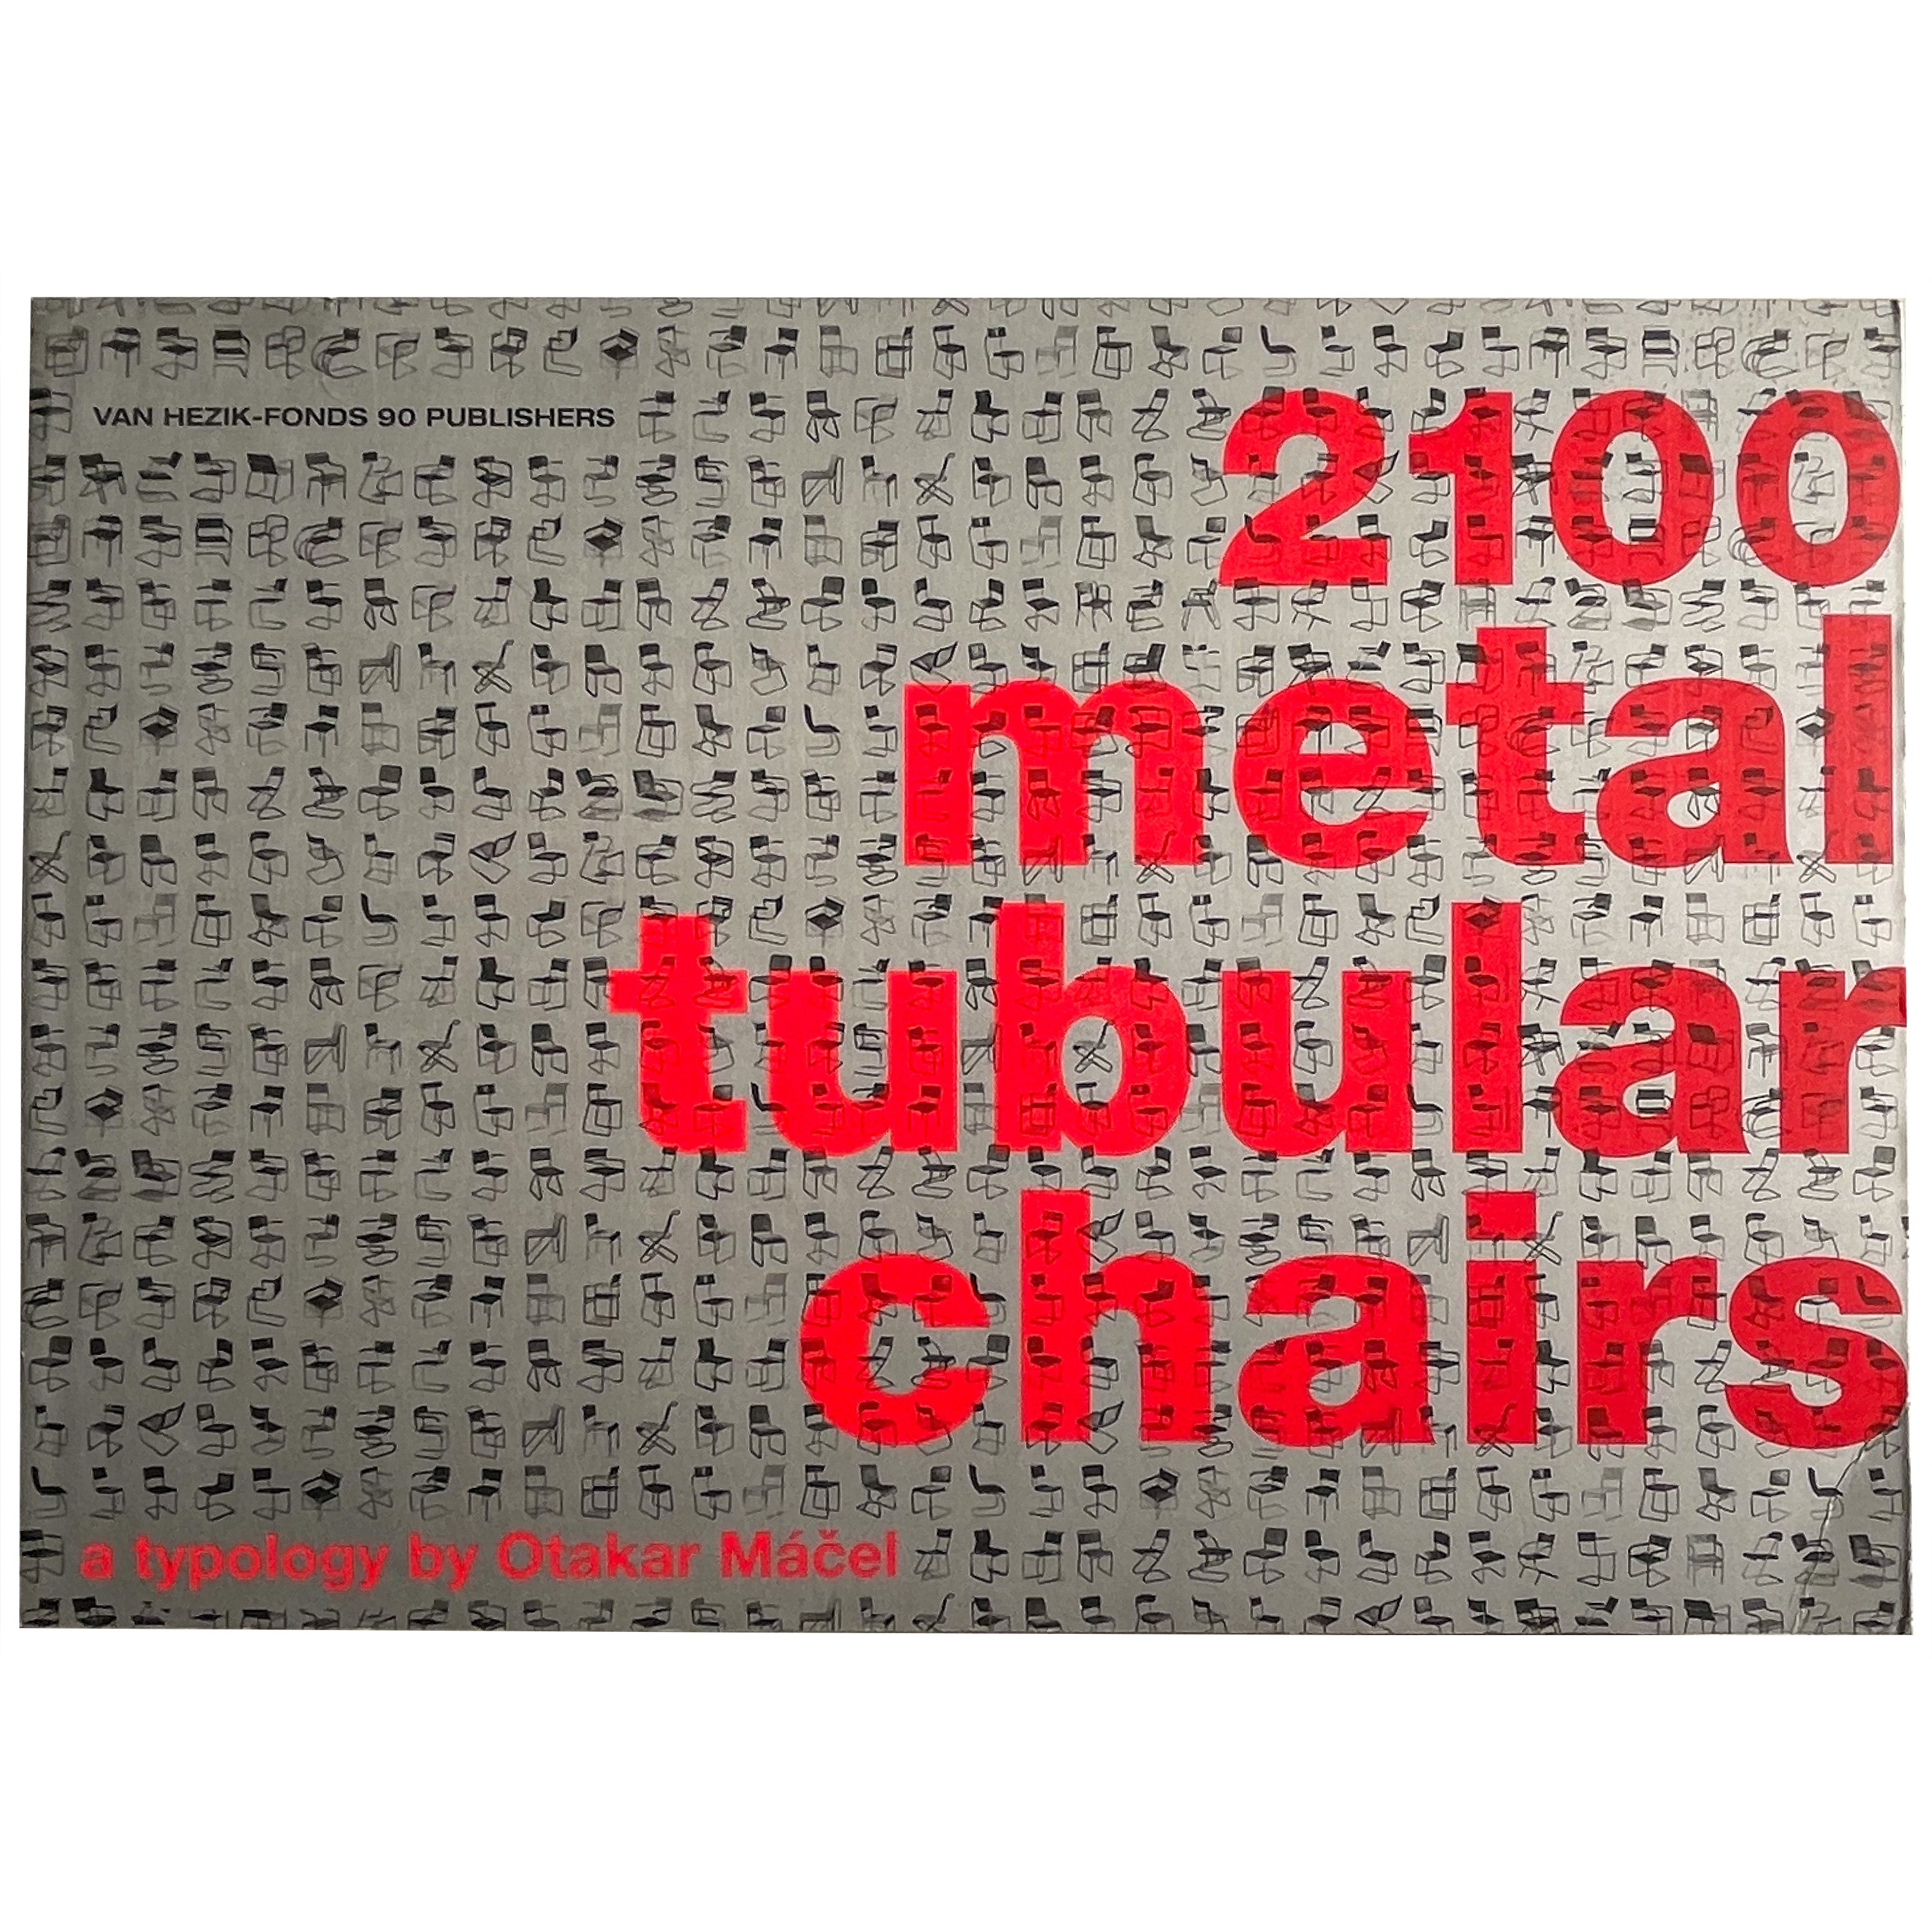 2100 Metal Tubular Chairs: a Typology